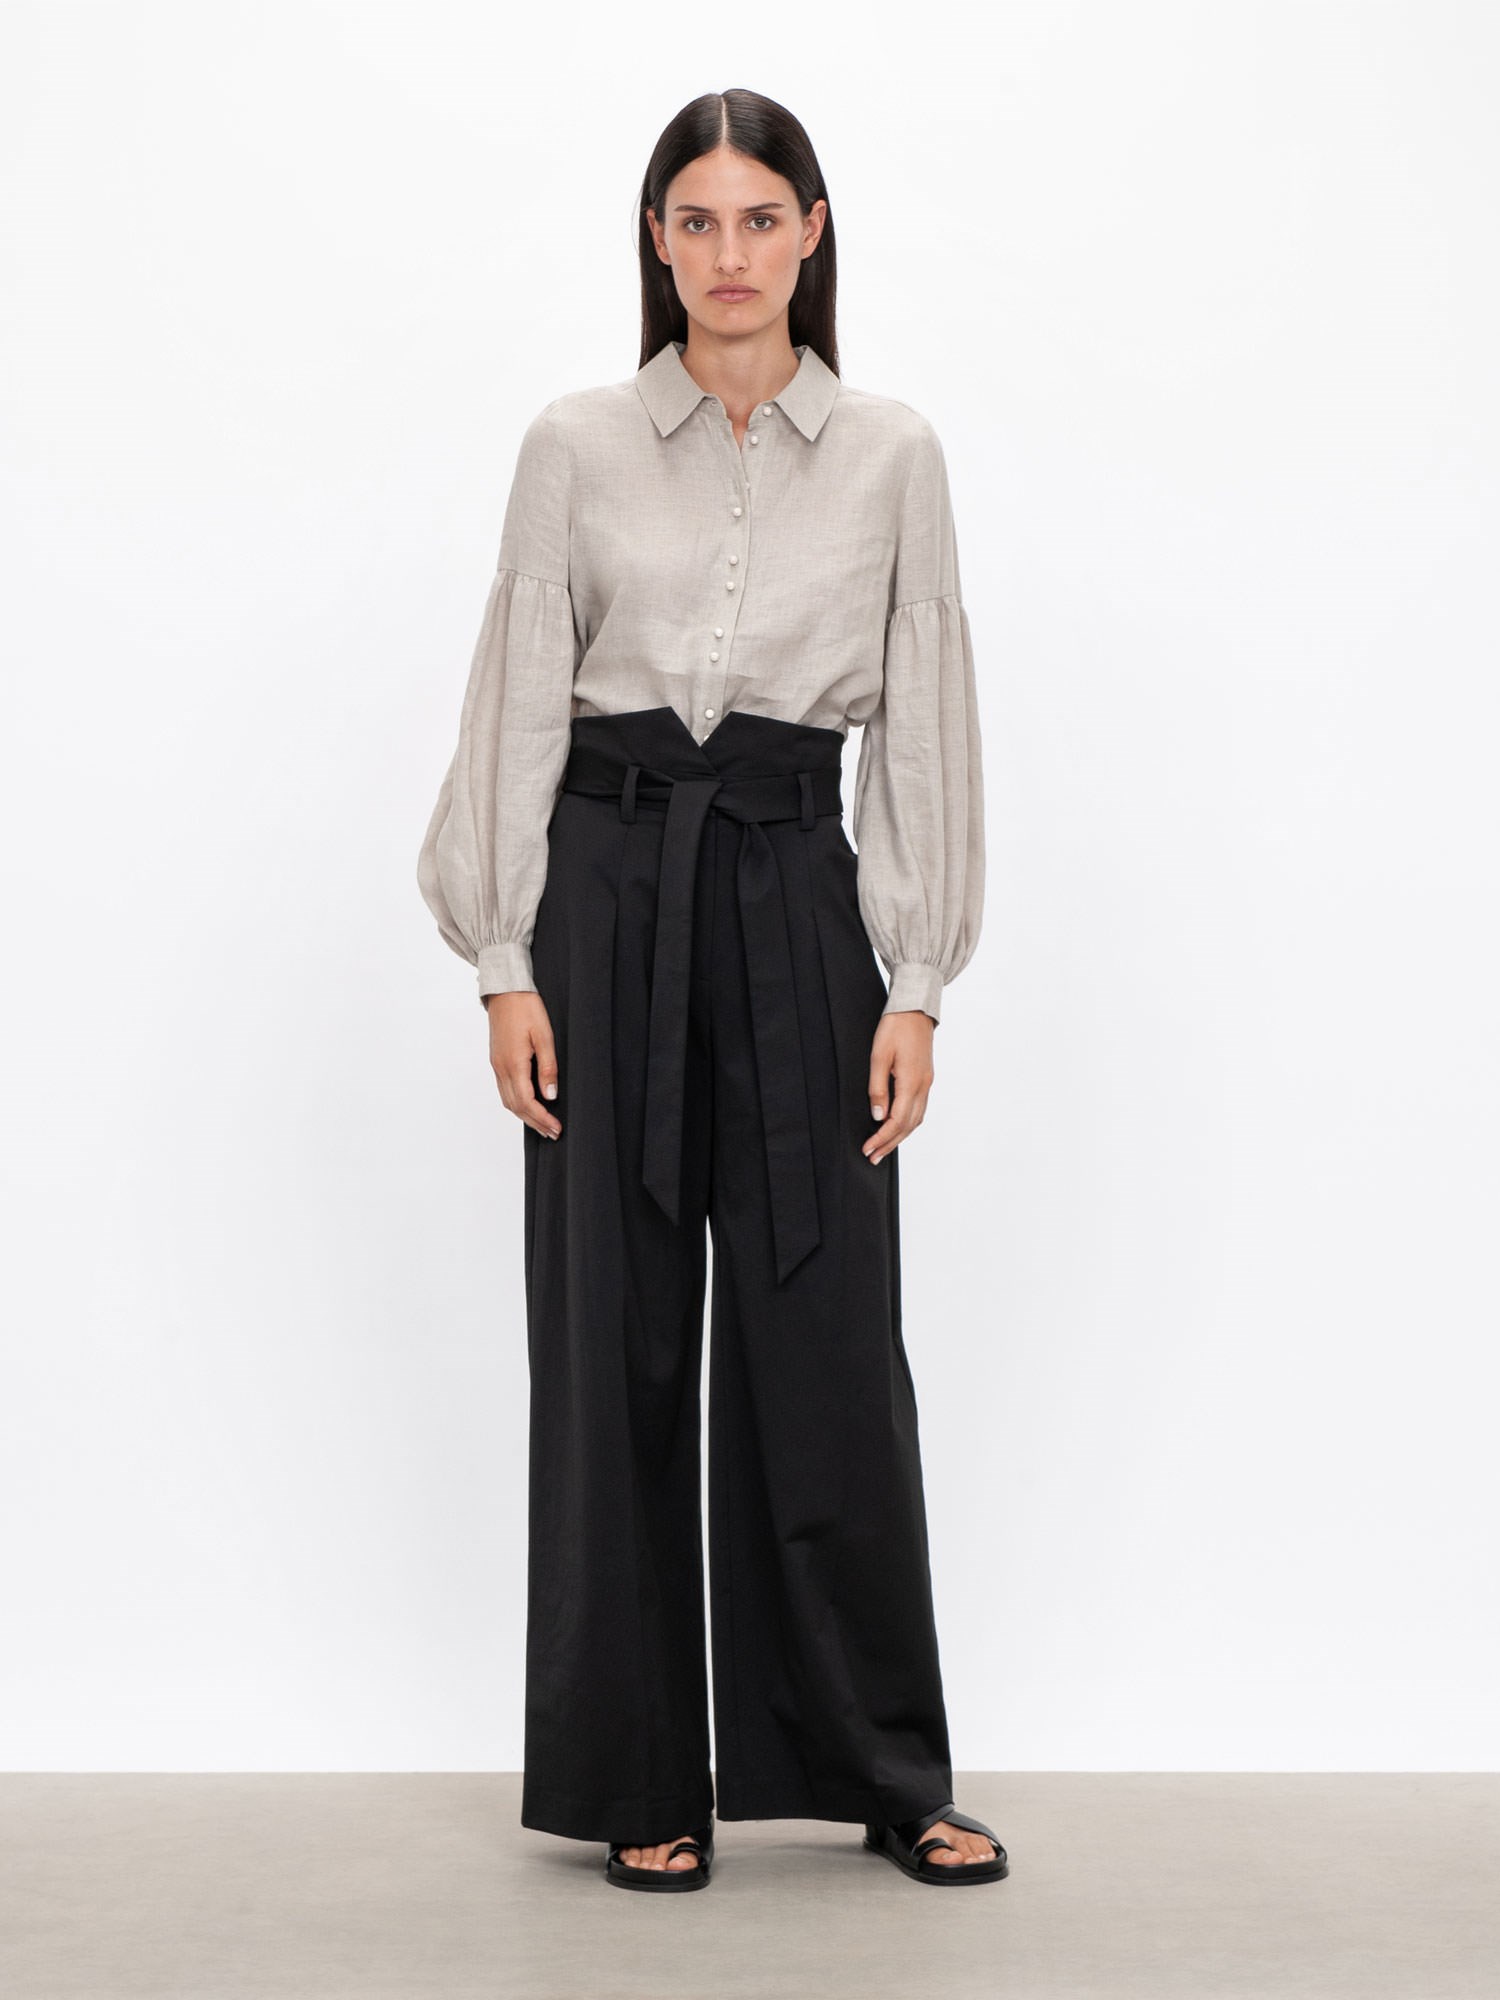 Fine Linen Bubble Shirt | Buy Tops Online - Veronika Maine